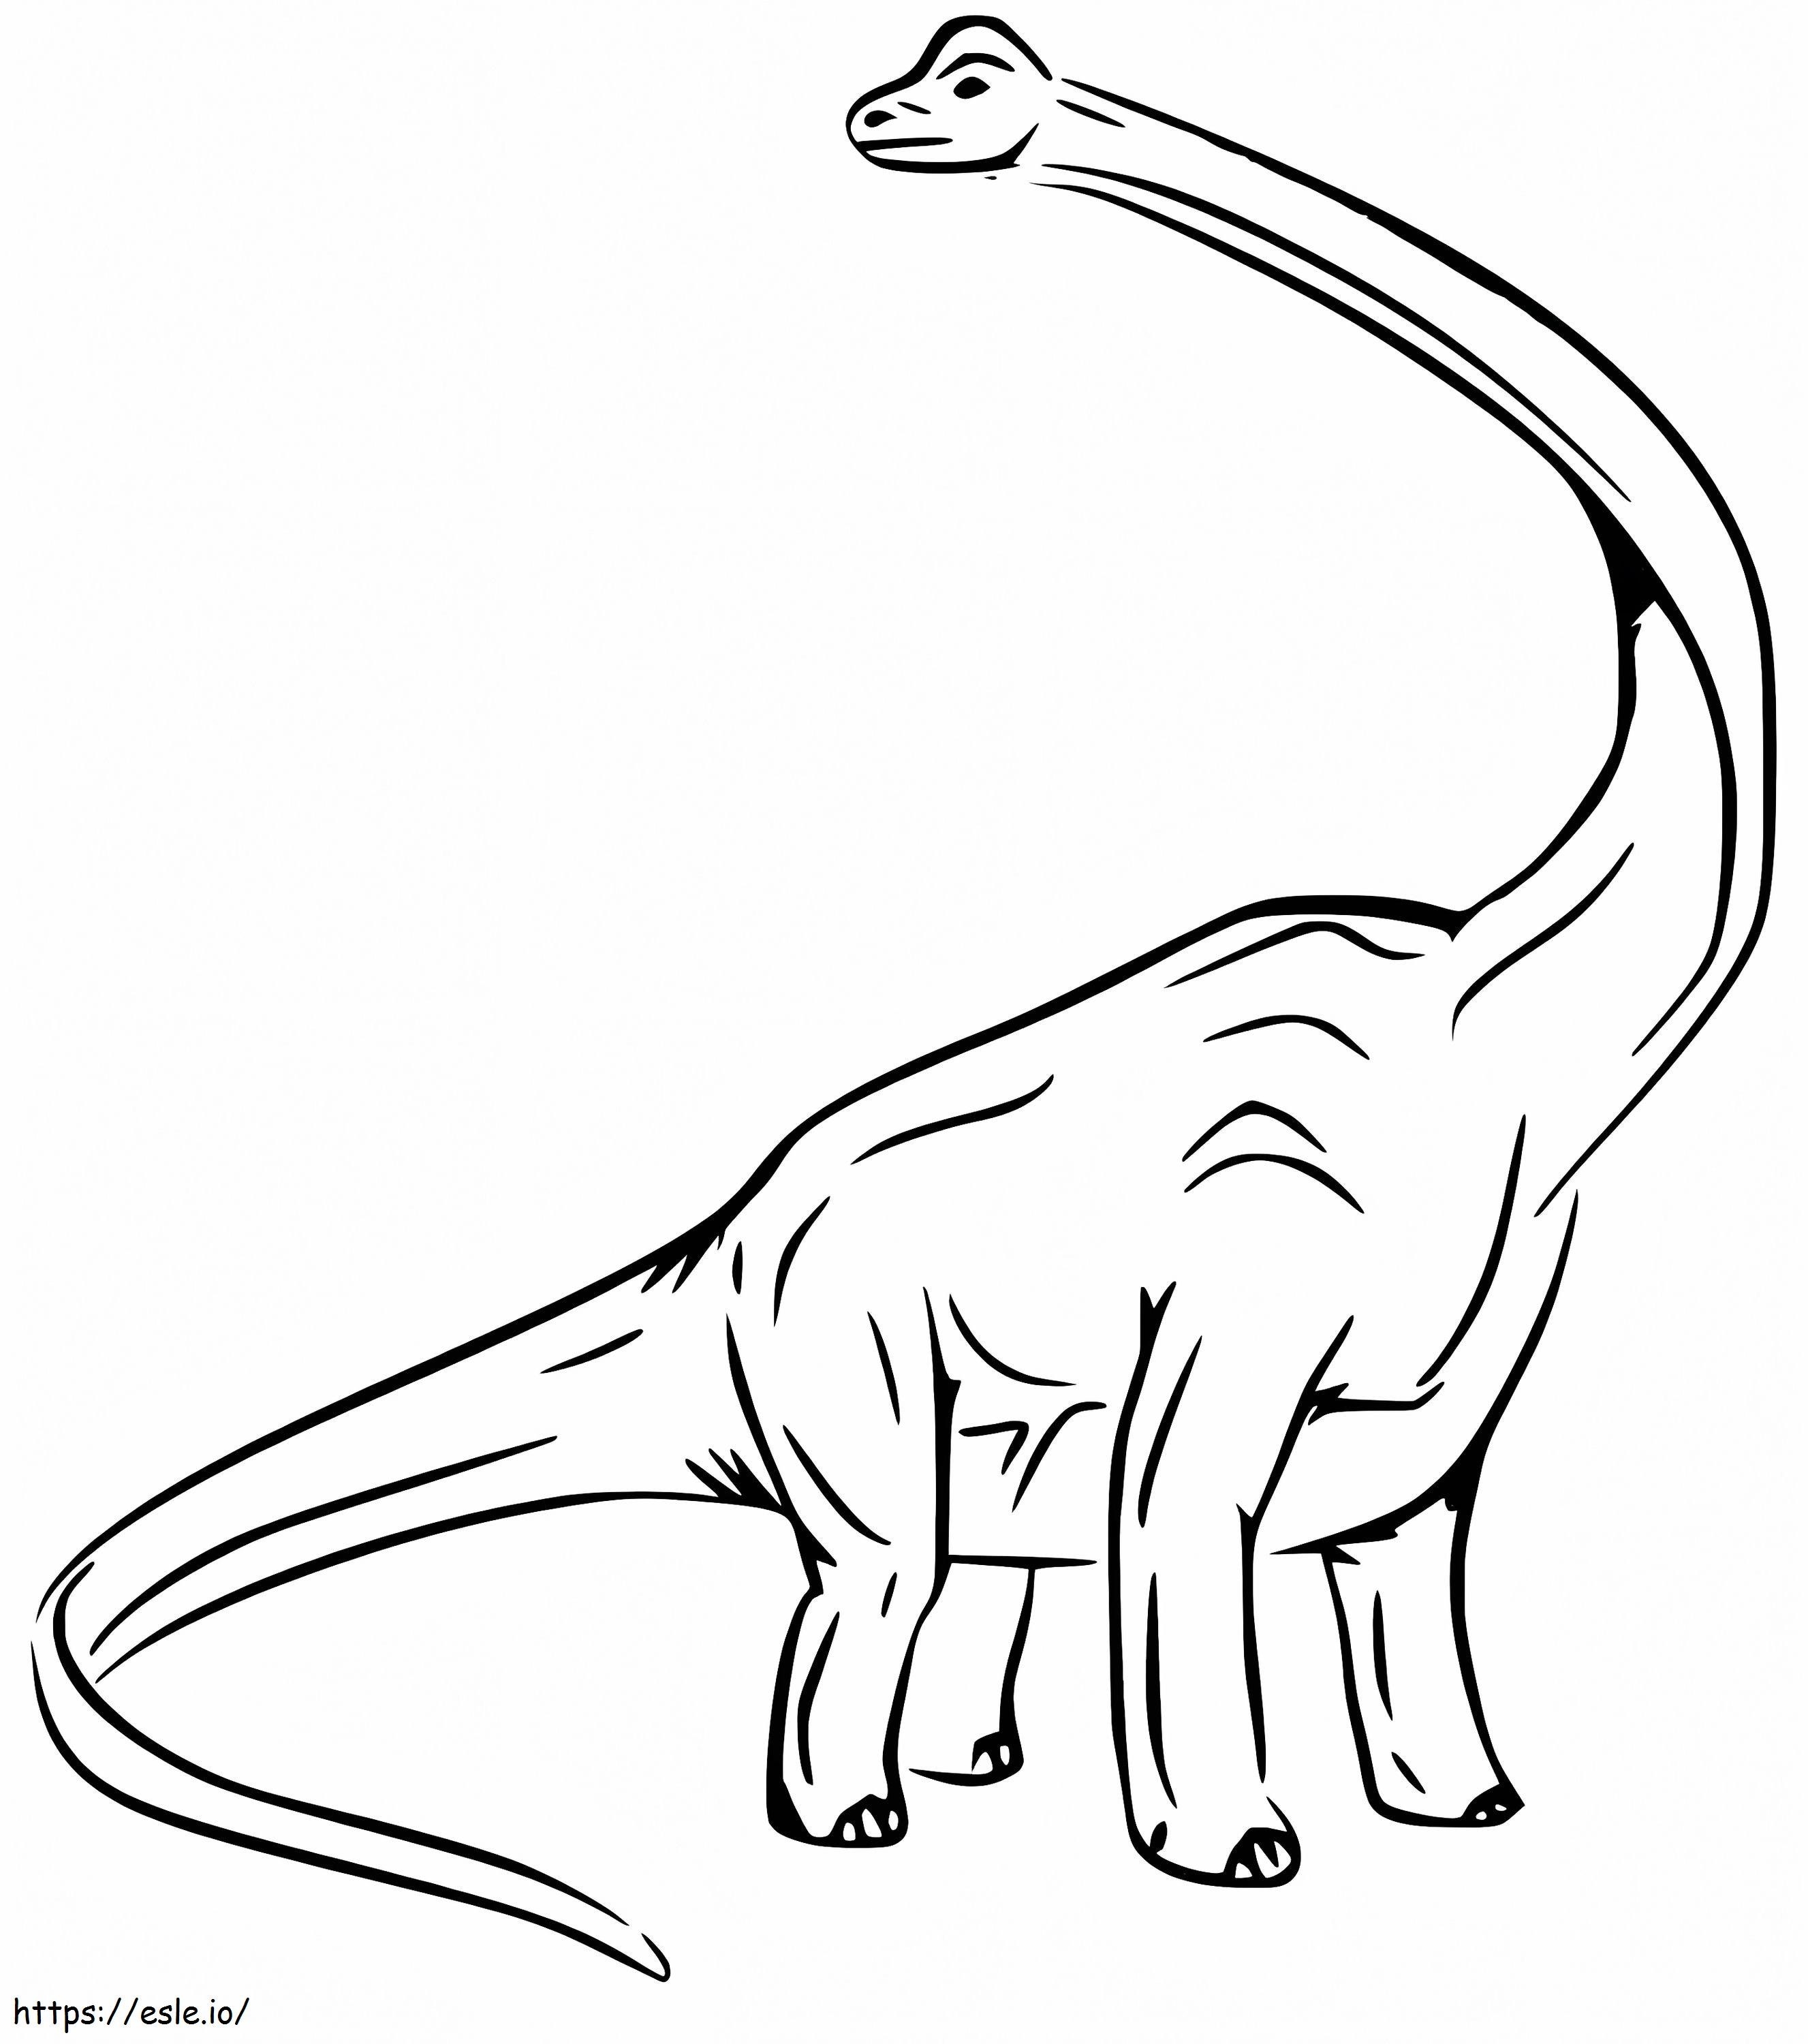 Huge Brachiosaurus coloring page